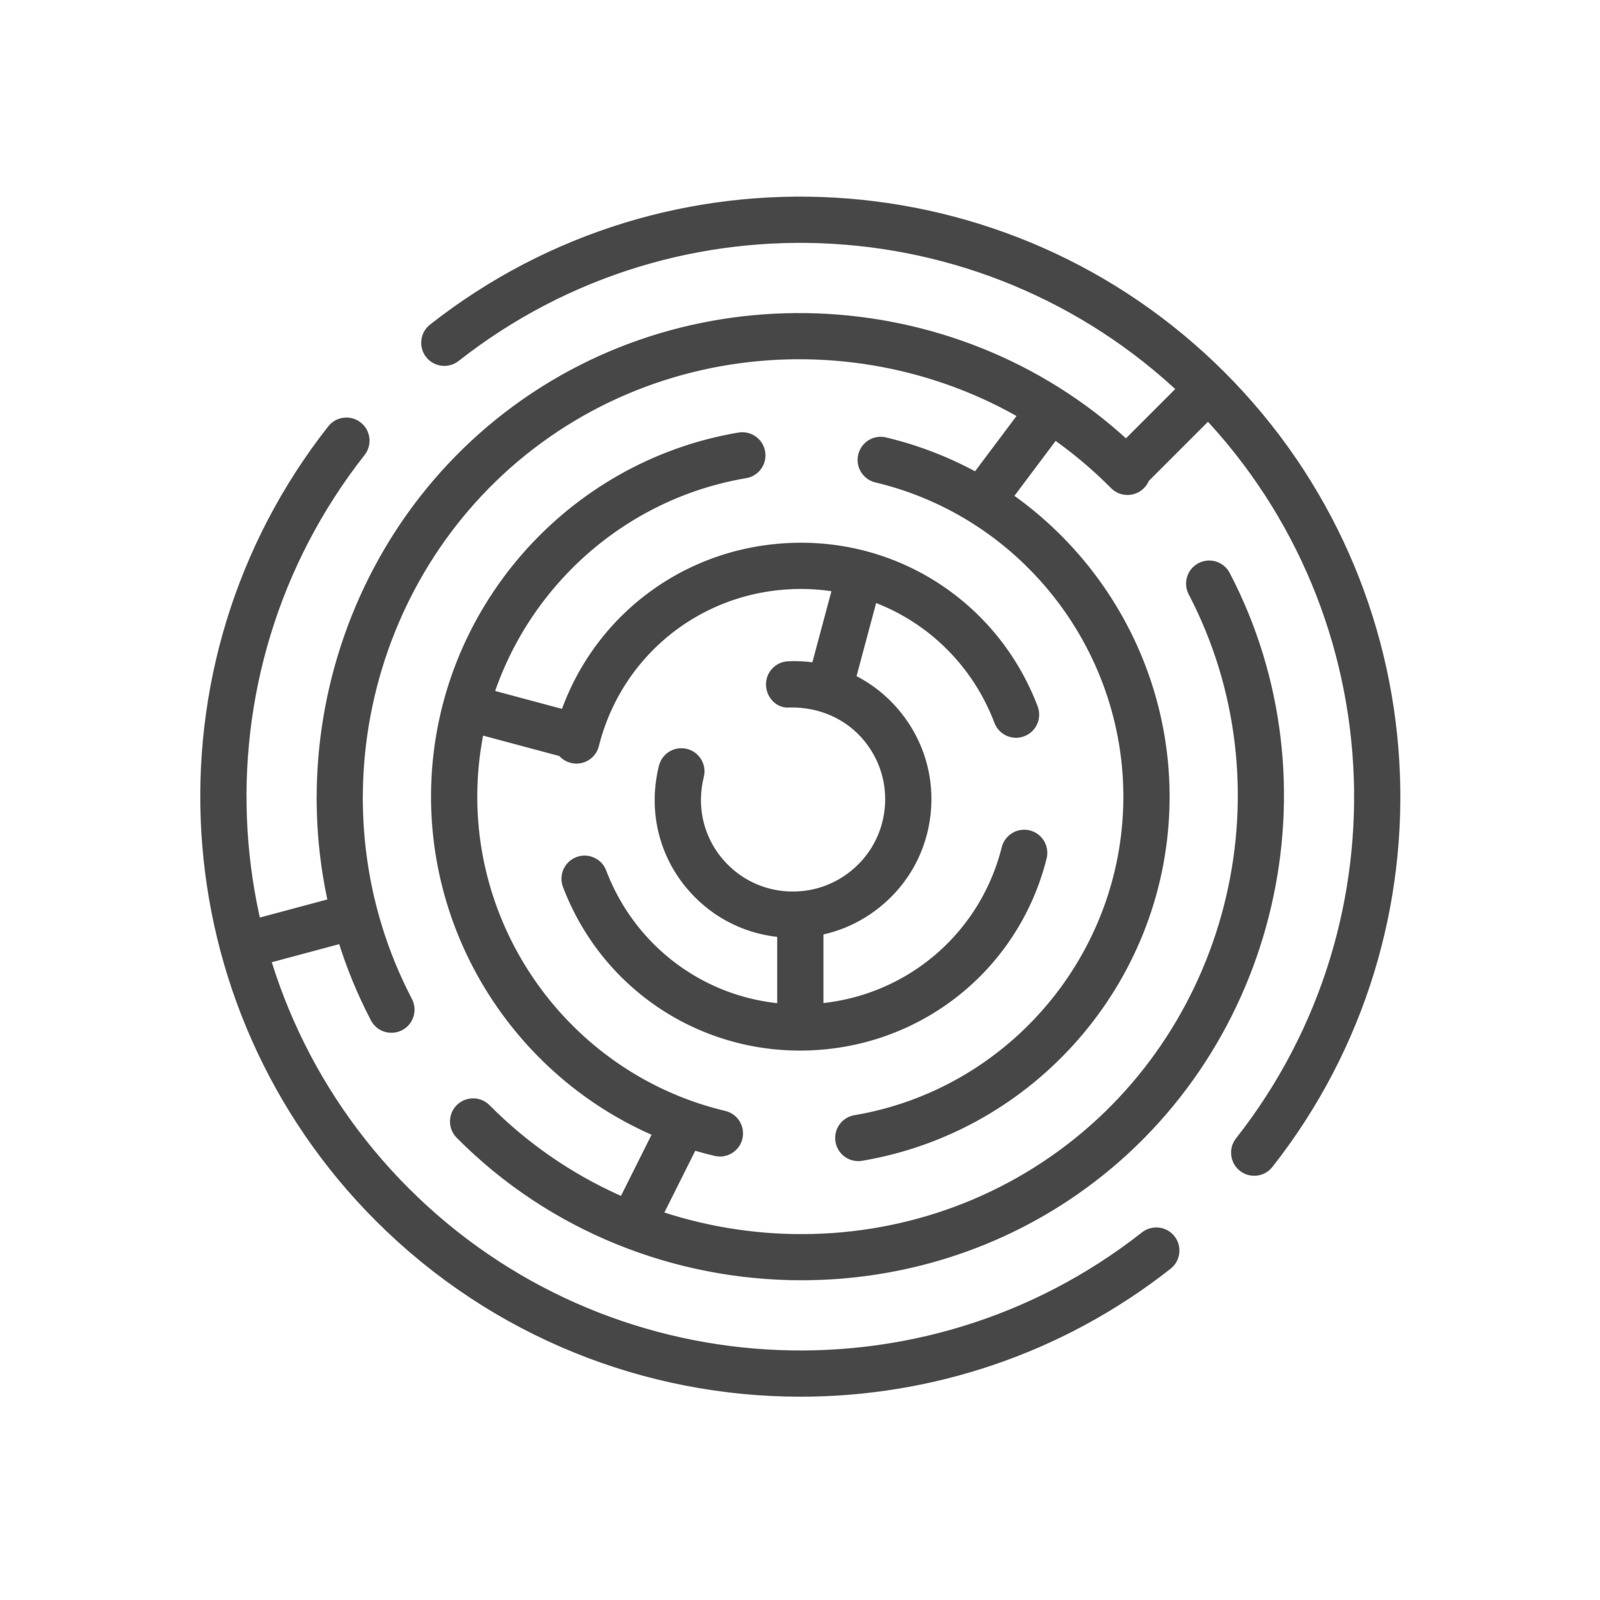 Labyrinth Thin Line Vector Icon by smoki